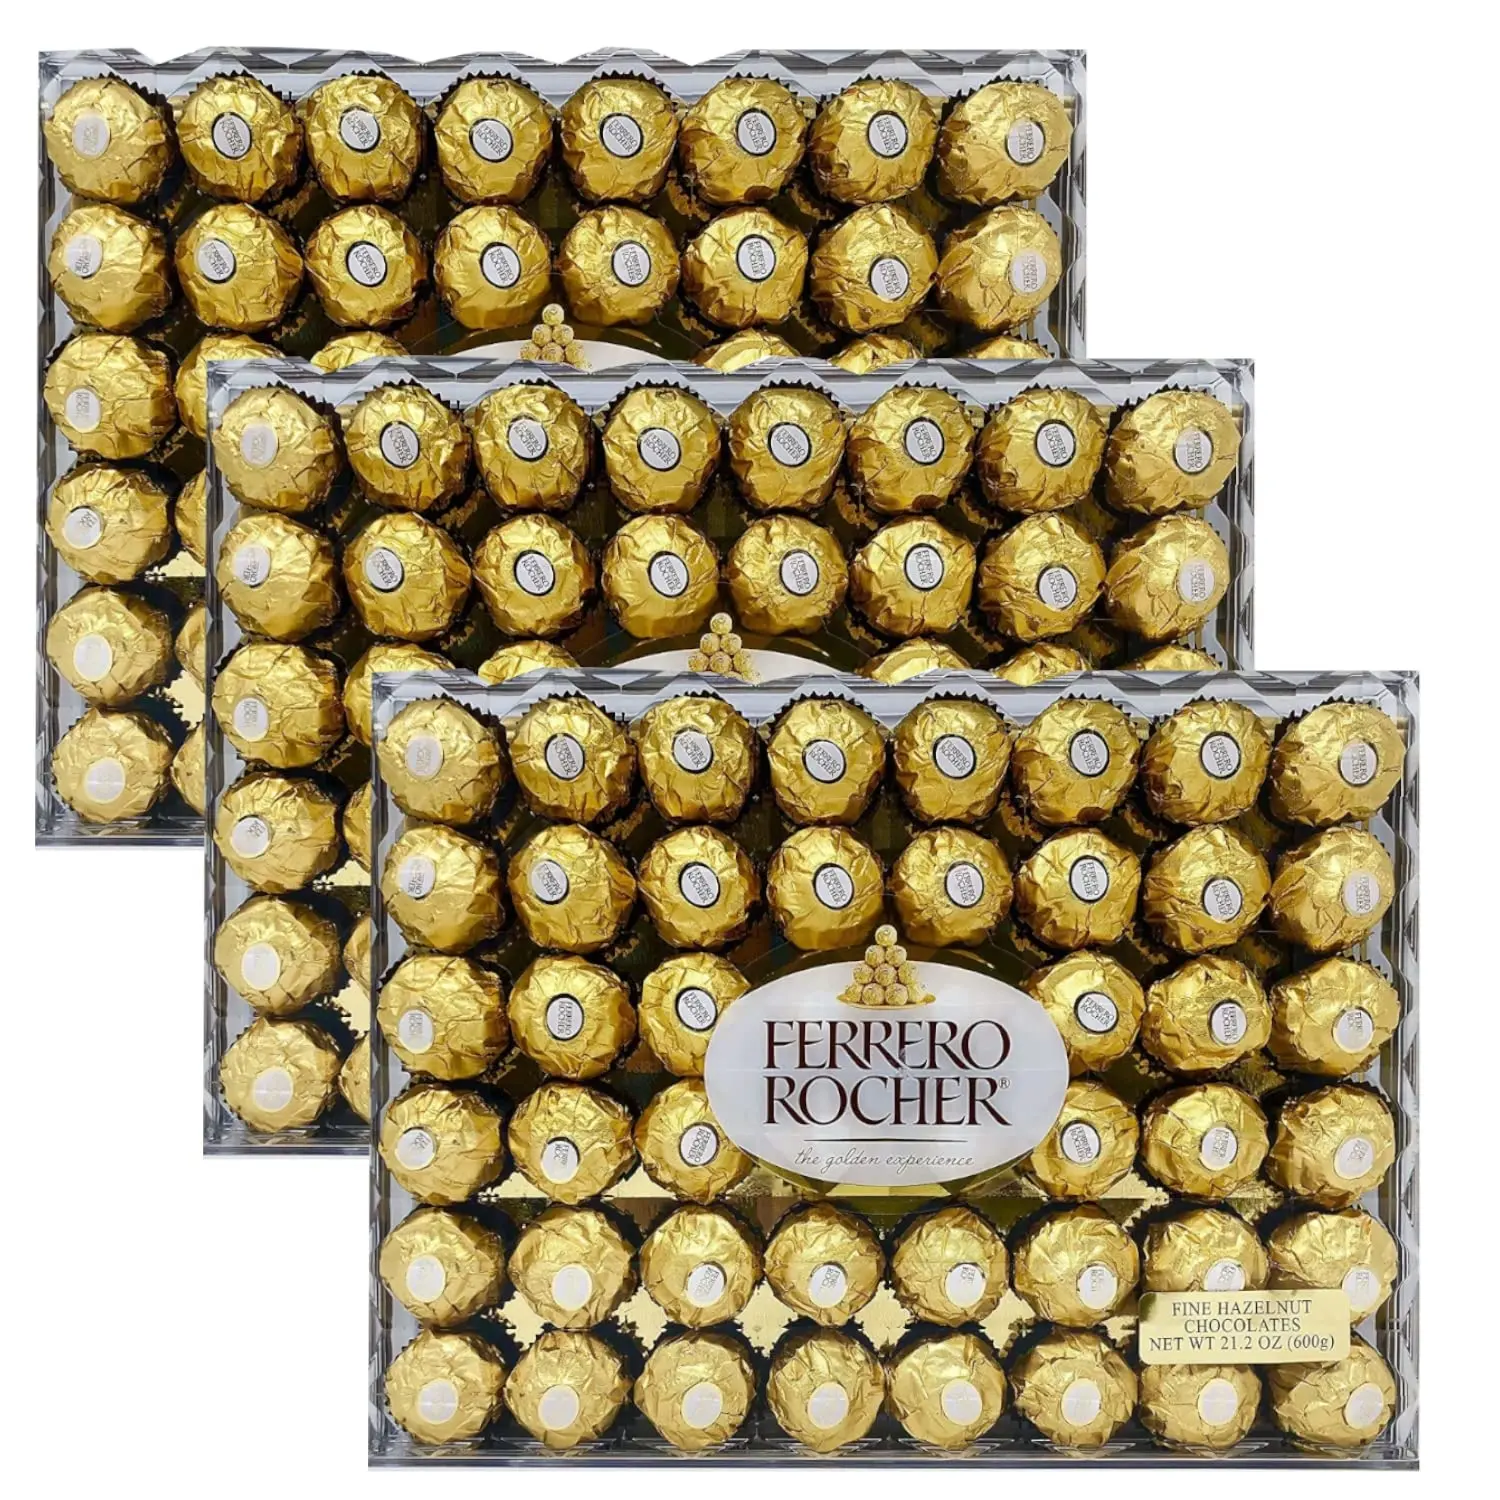 Toptan fiyat Chocolates ro Rocher çikolata kutusu Ferrero Rocher çikolata toptan